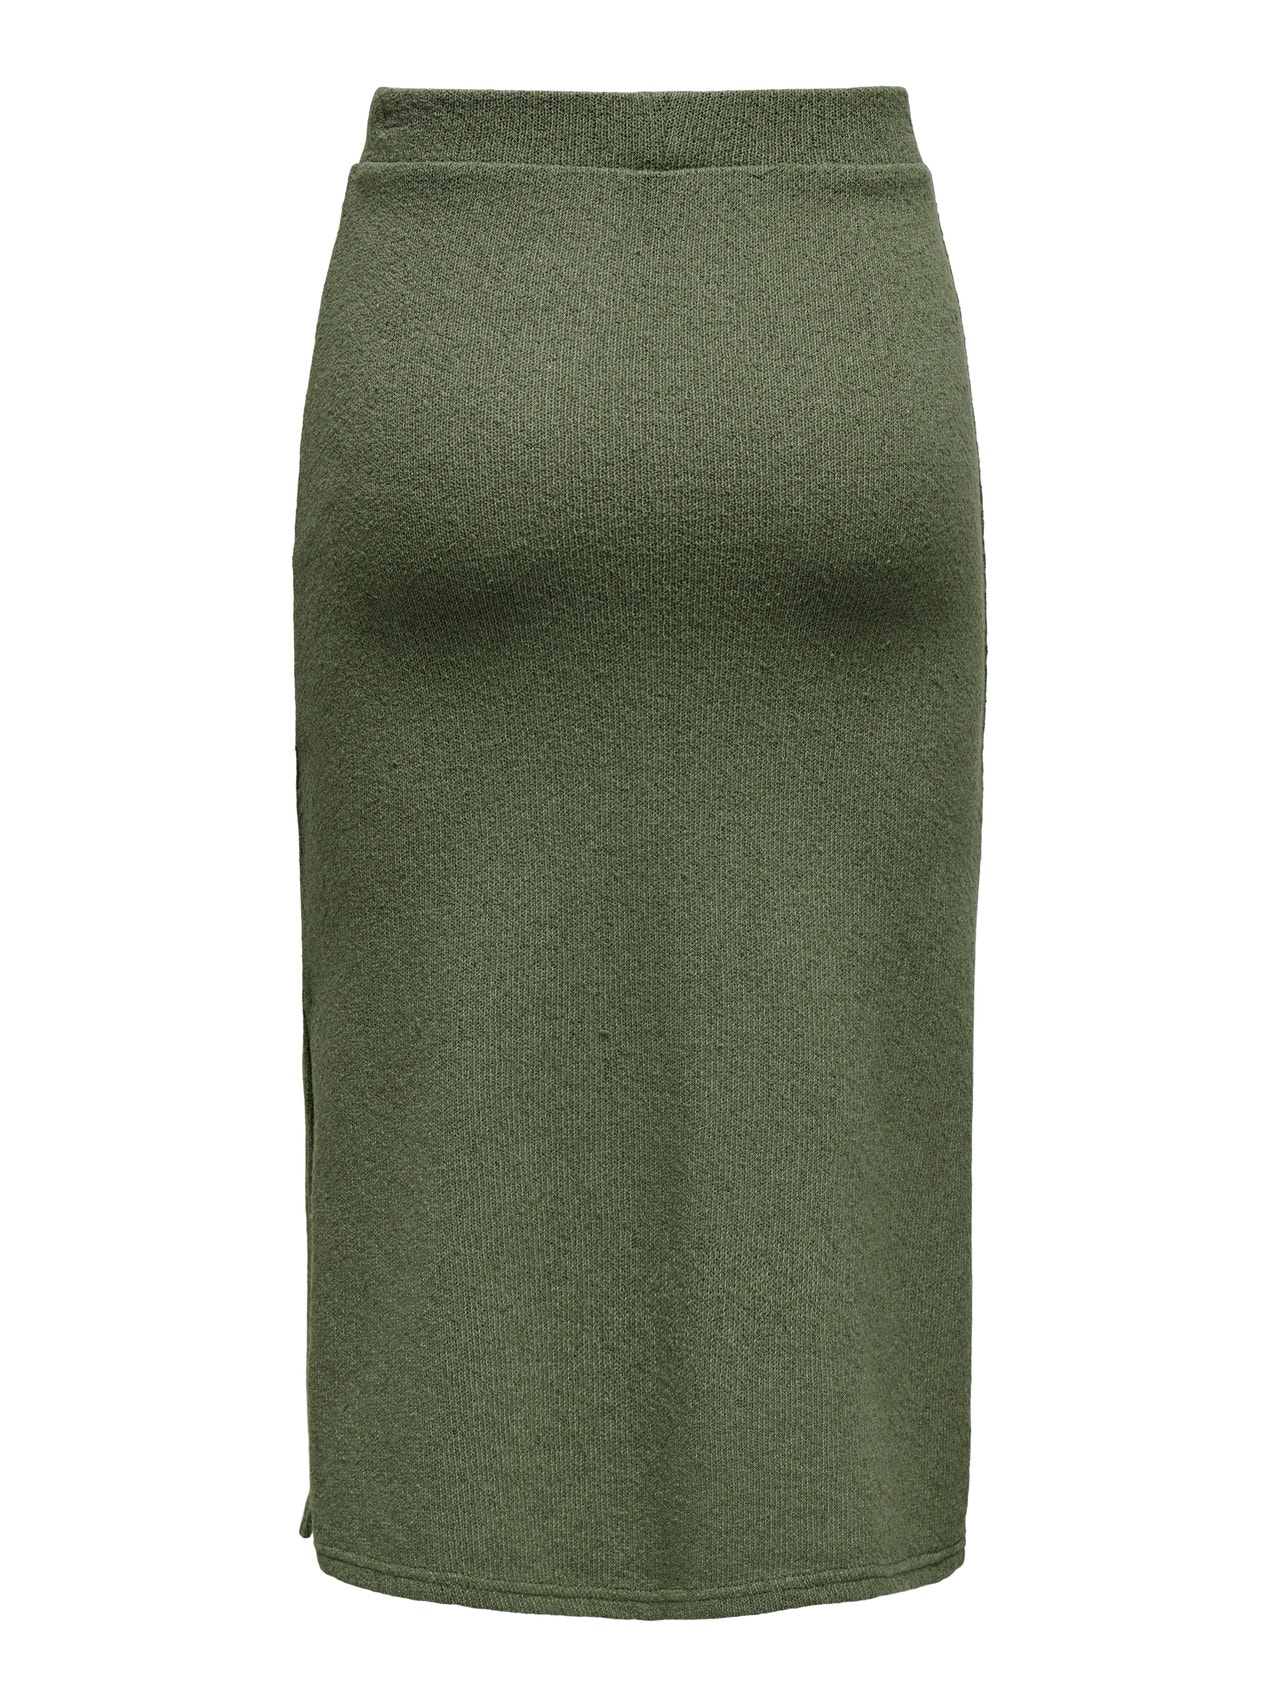 ONLY Midi skirt with slit -Four Leaf Clover - 15341391